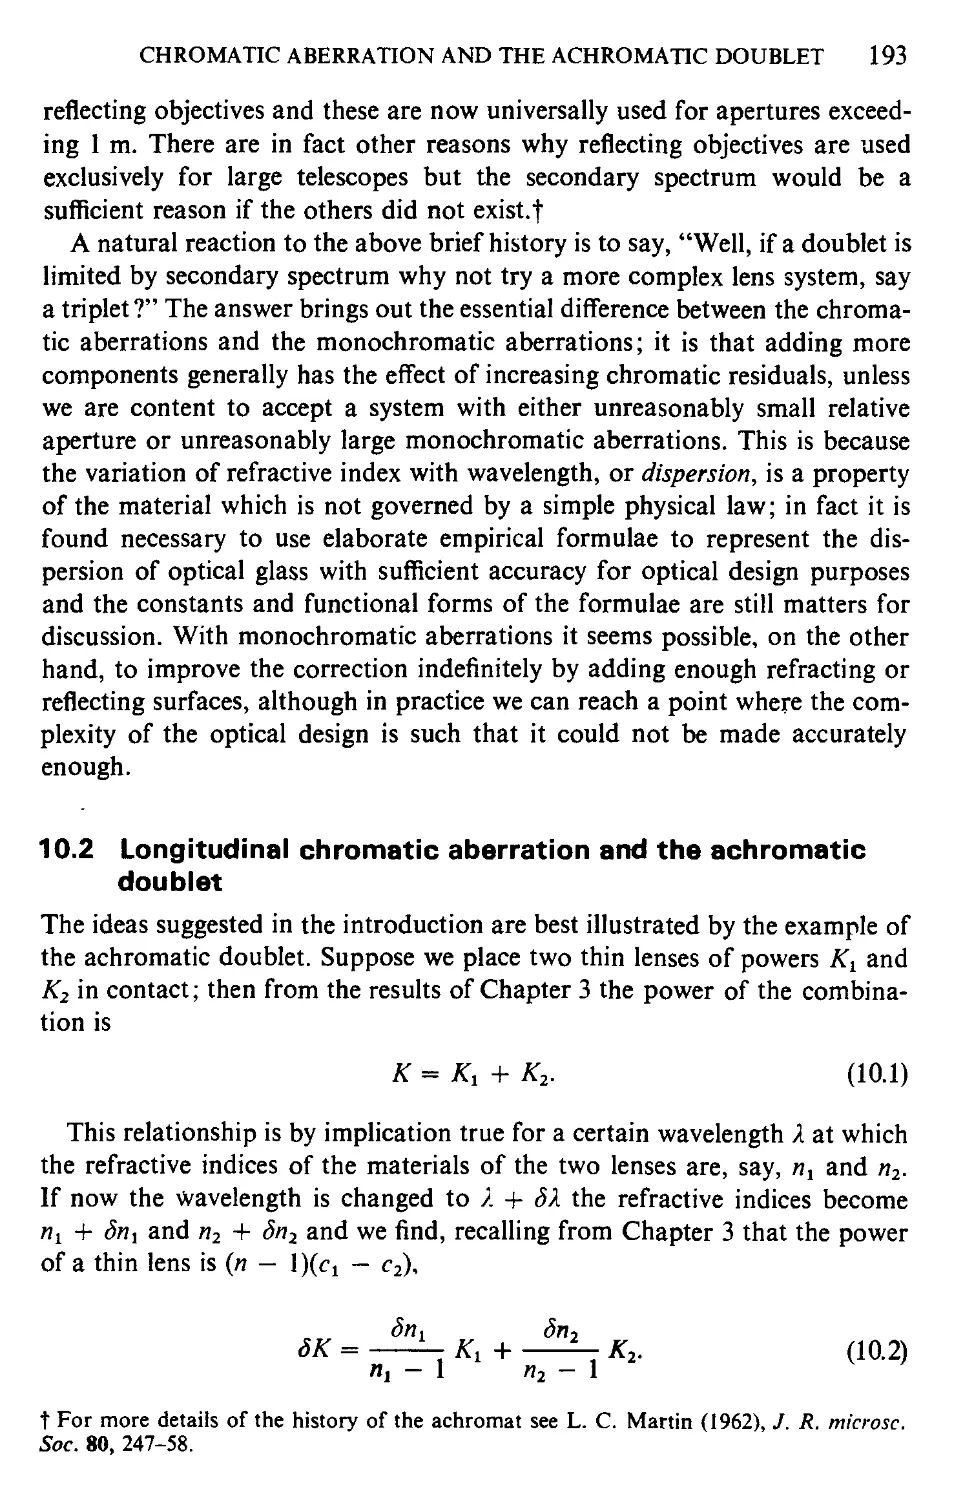 10.2 Longitudinal chromatic aberration and the achromatic doublet